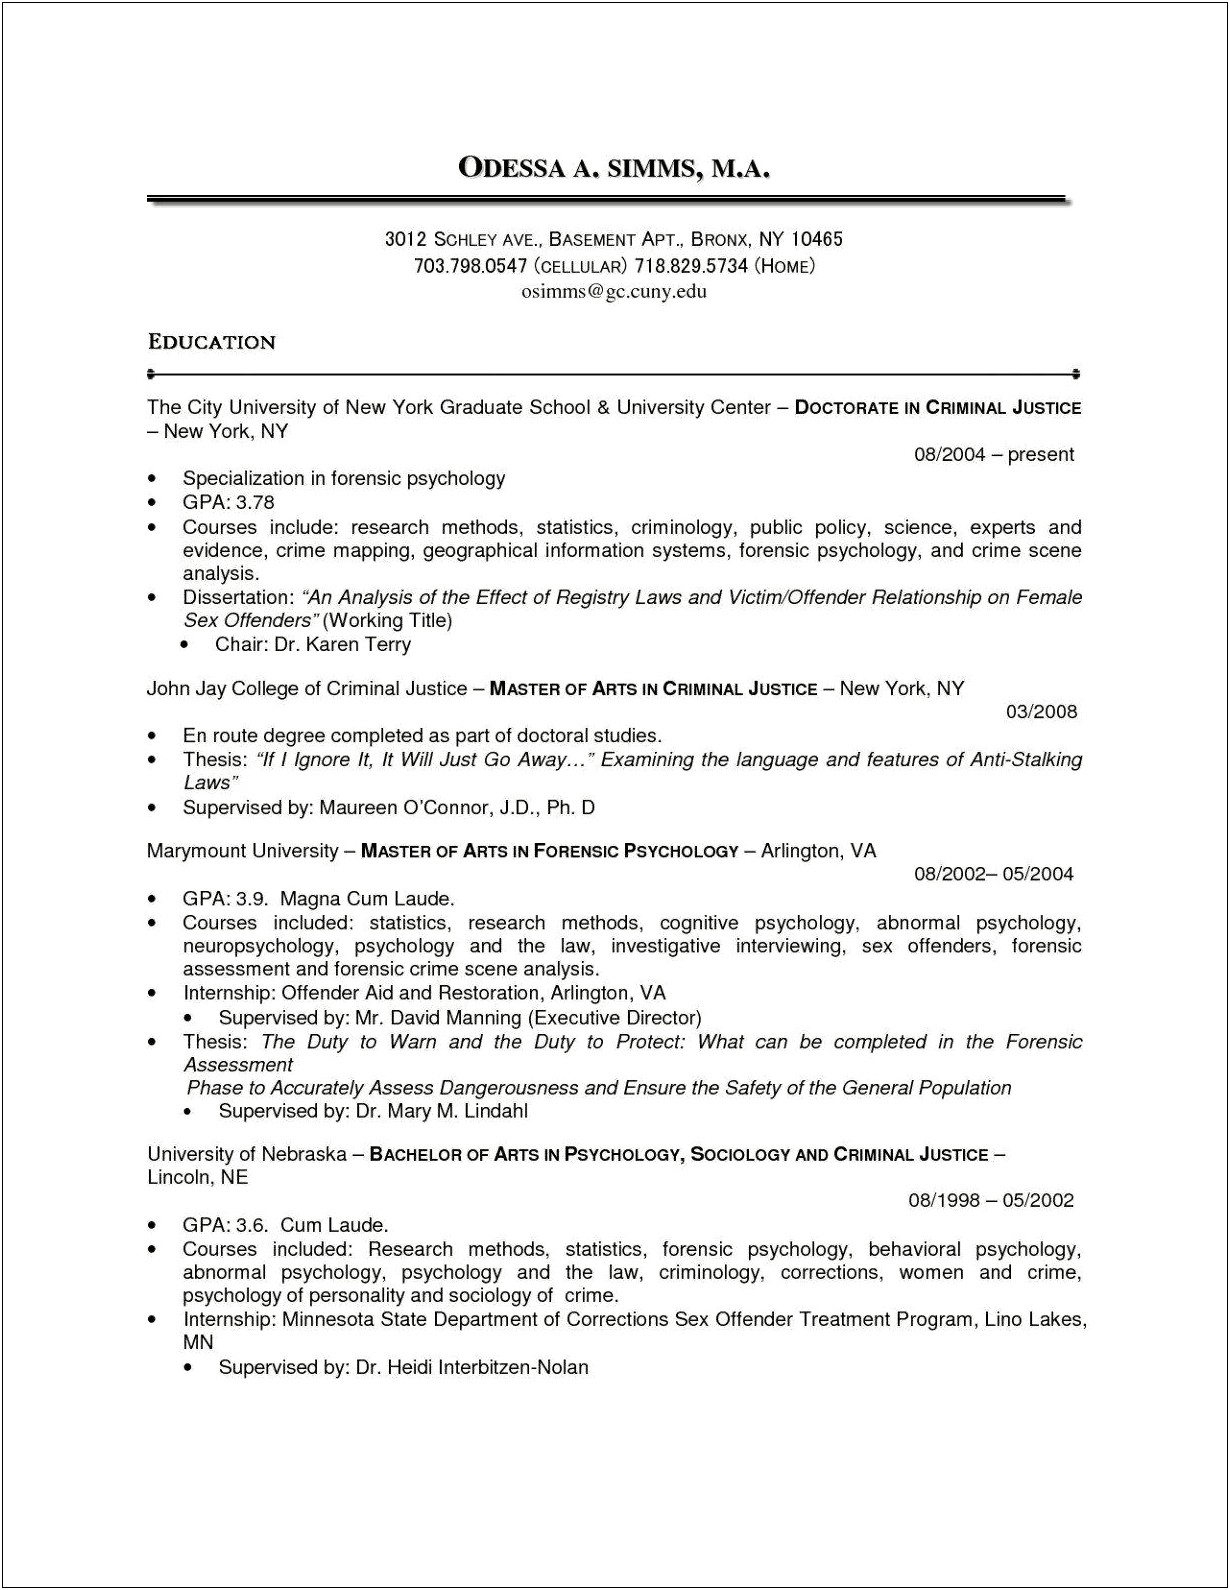 Psychology Research Internship Description For Resume